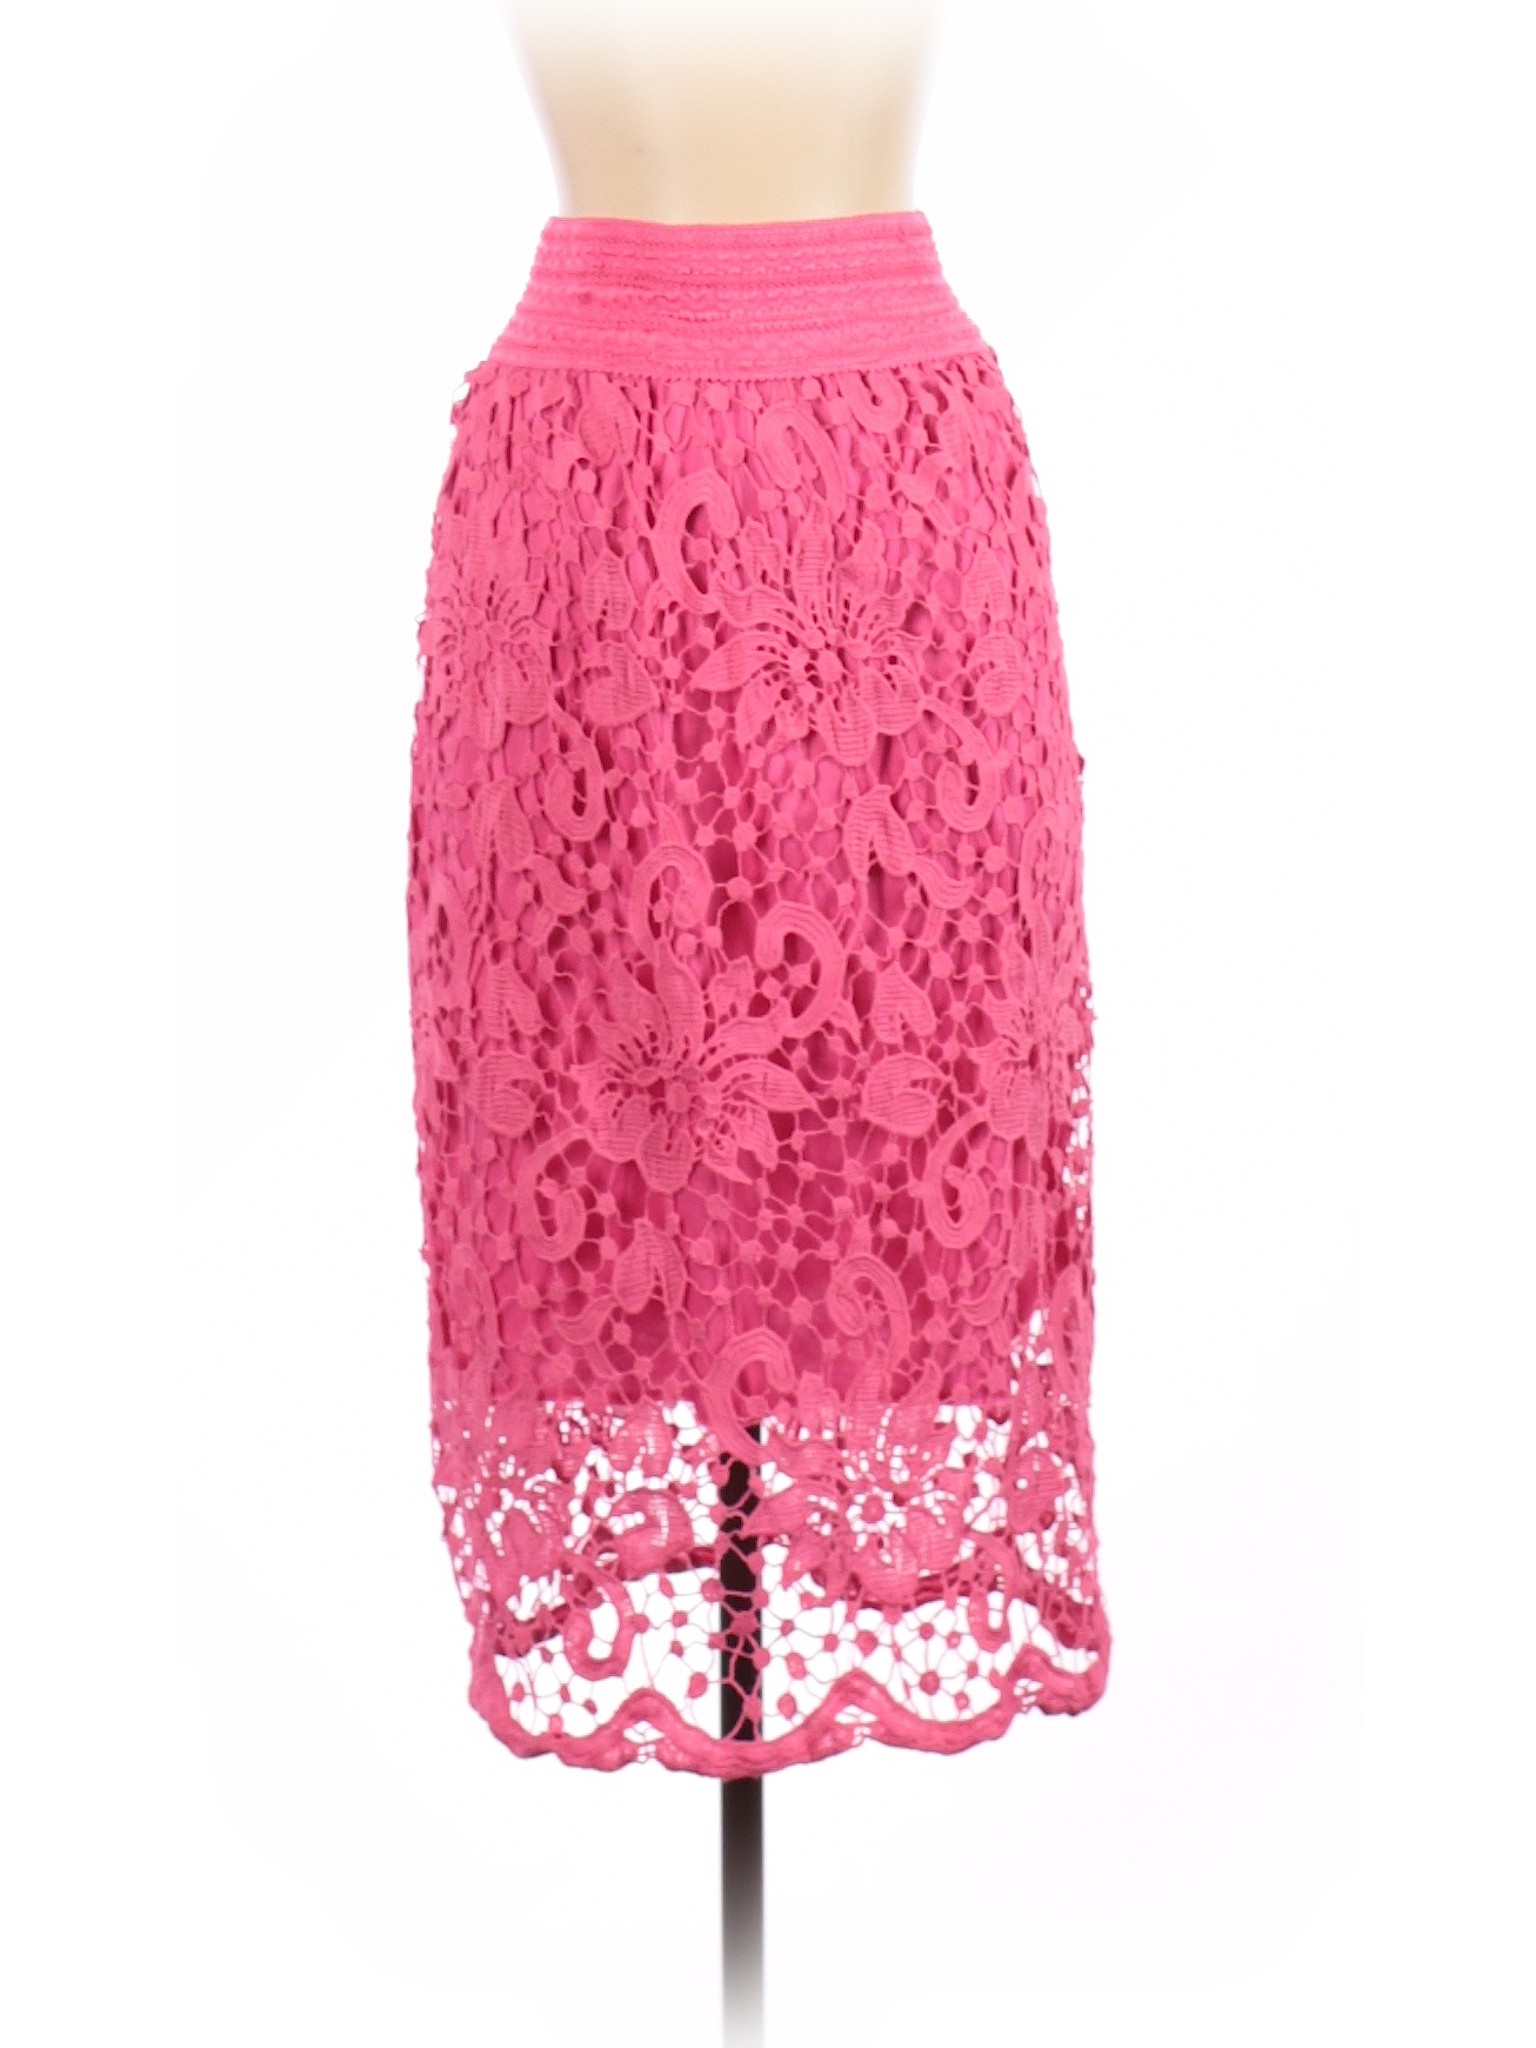 Unbranded Women Pink Casual Skirt M | eBay